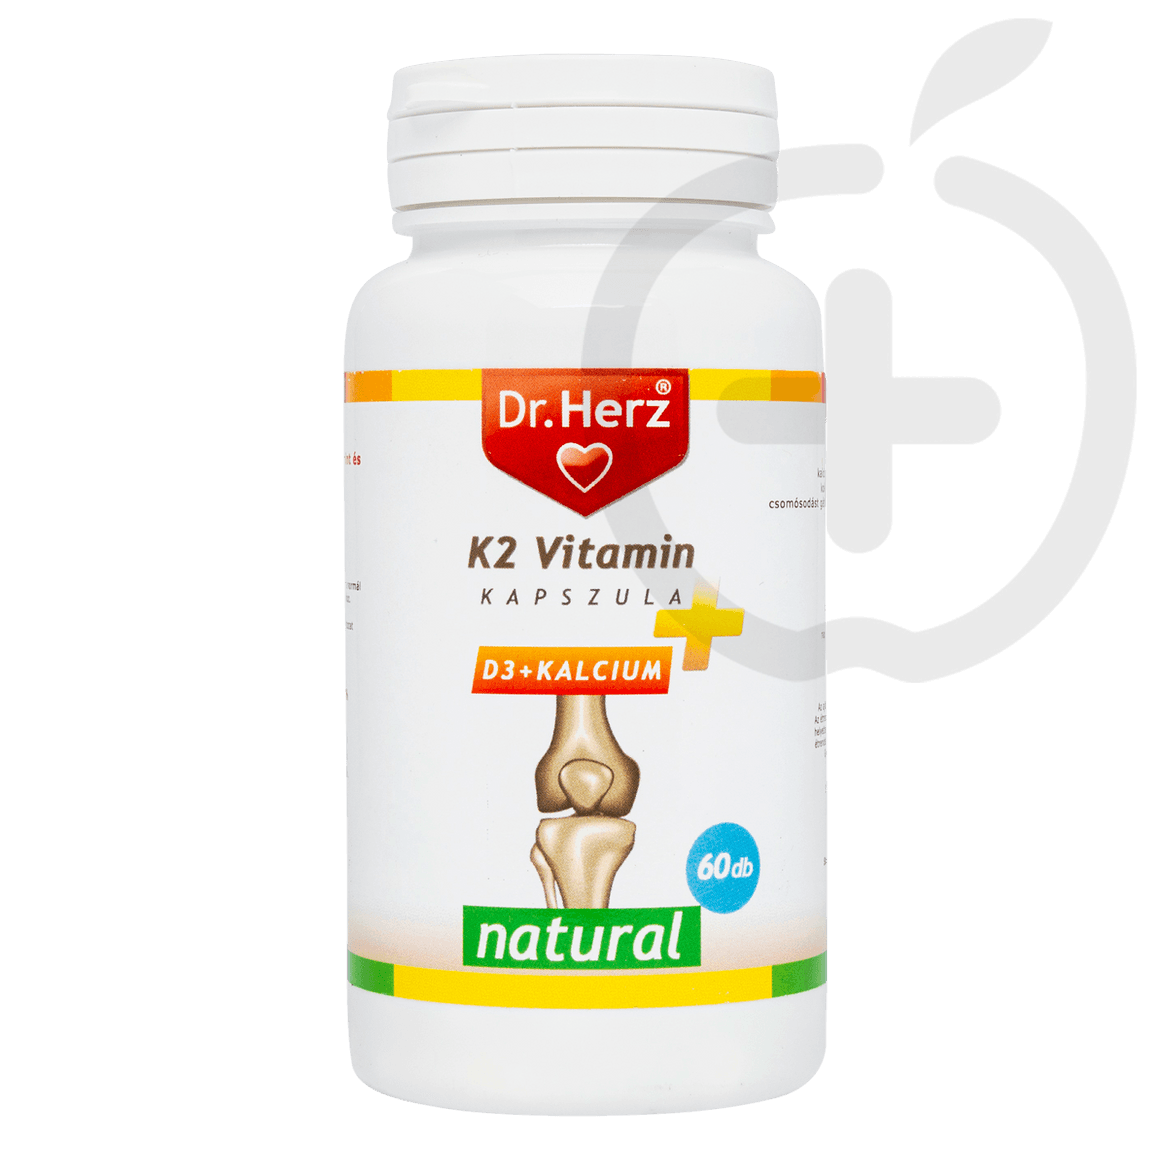 Dr. Herz K2-vitamin + D3 + Kalcium kapszula 60 db